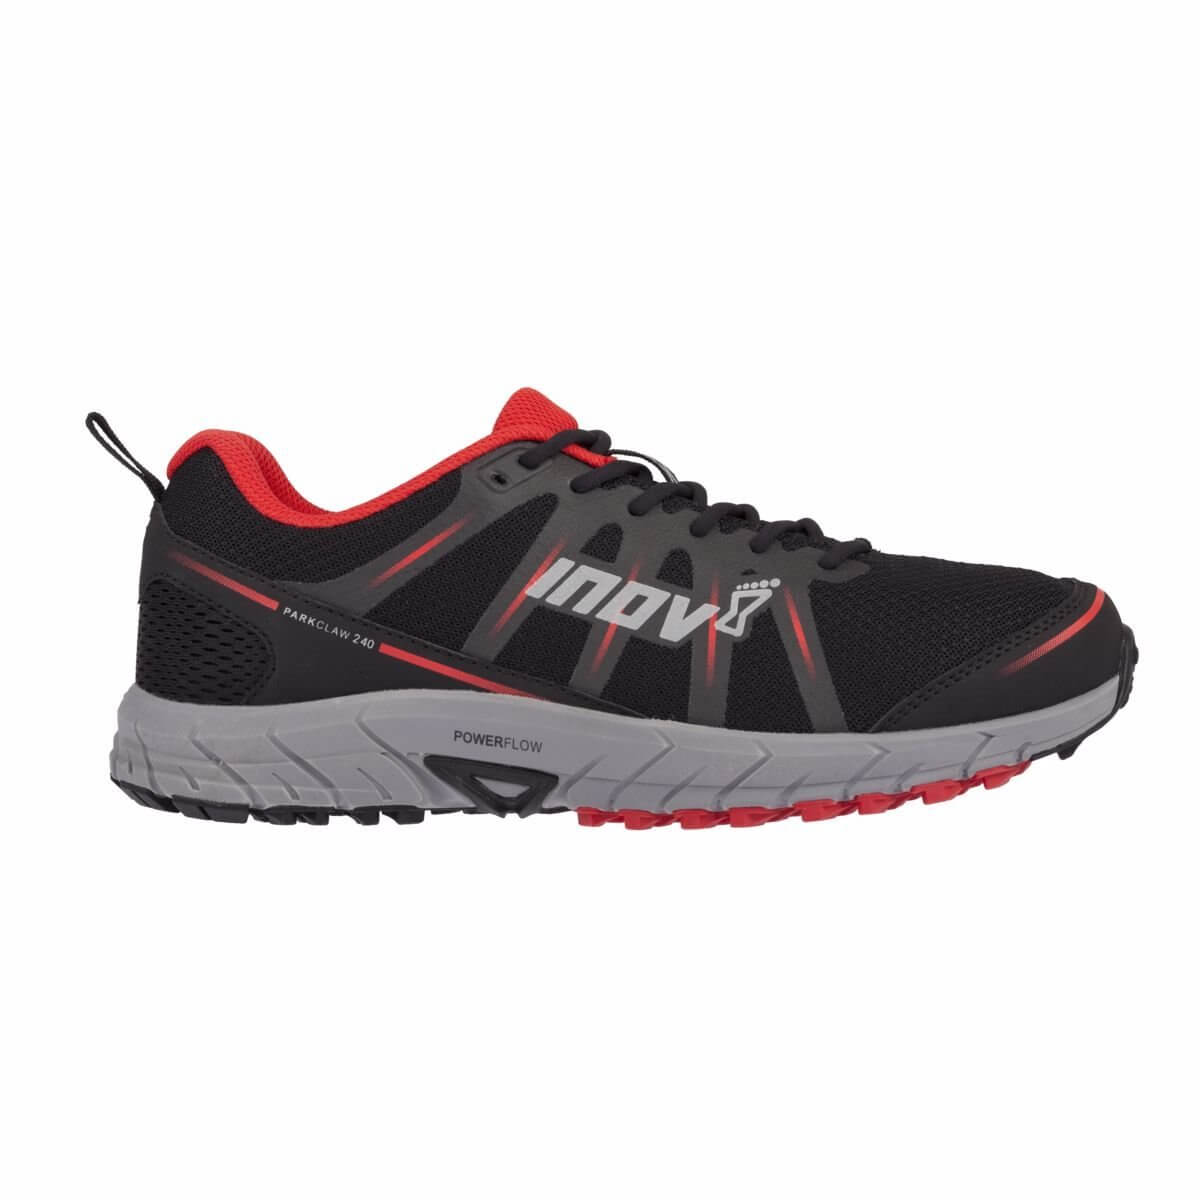 Bežecké topánky Inov-8 PARKCLAW 240 (S) black/red černá s červenou